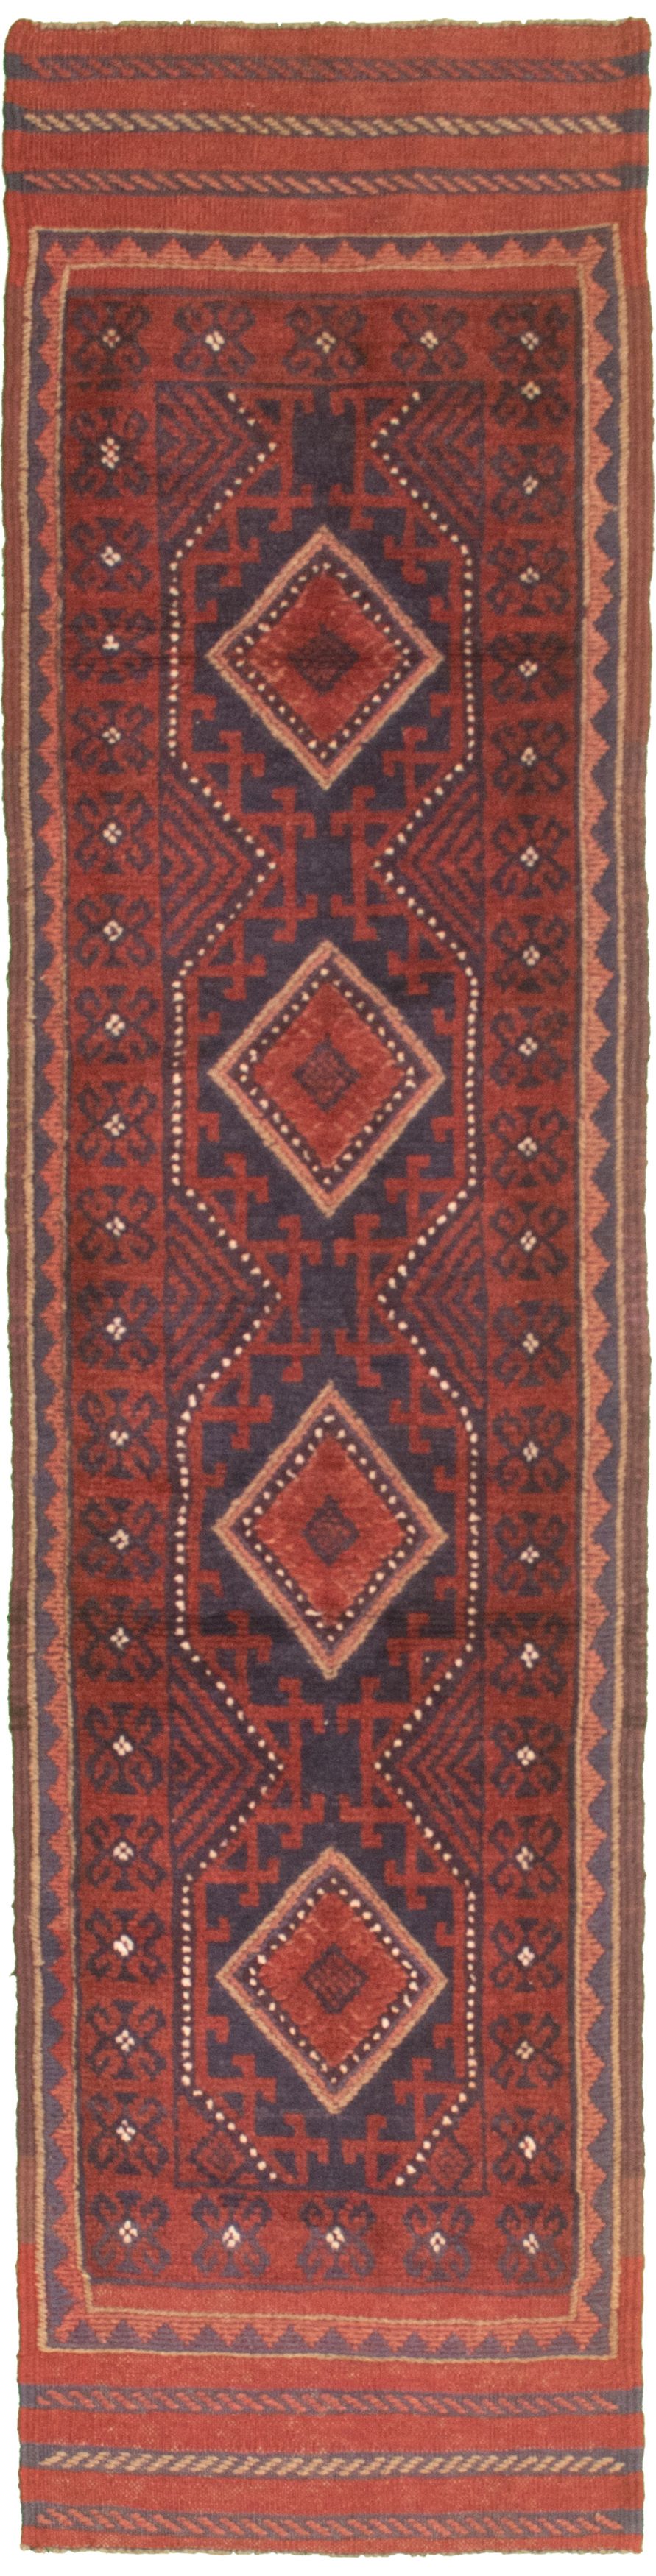 Hand-knotted Tajik Caucasian Red Wool Rug 1'10" x 8'2"  Size: 1'10" x 8'2"  